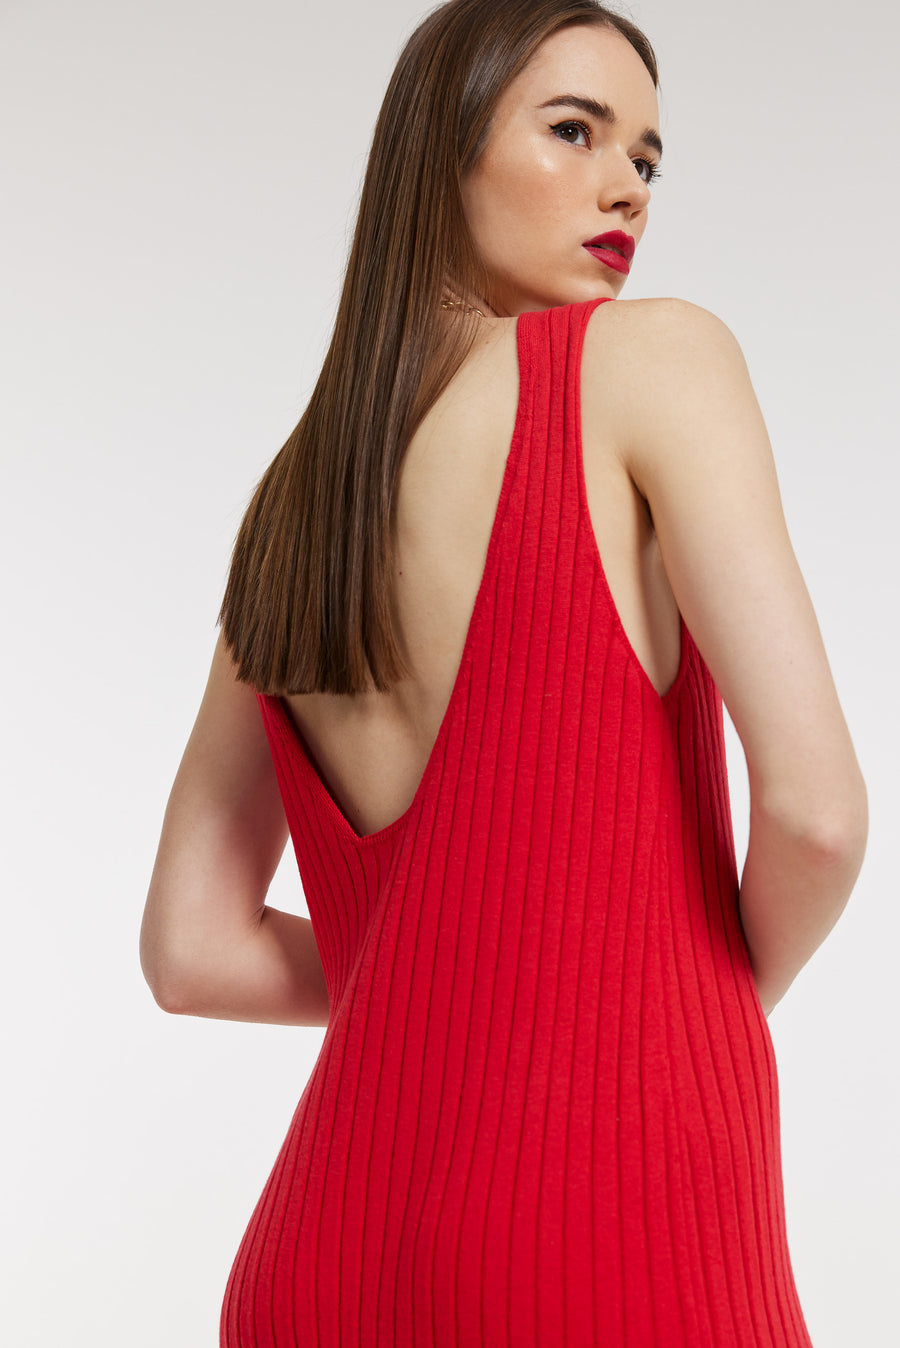 Moana Dress (Red)